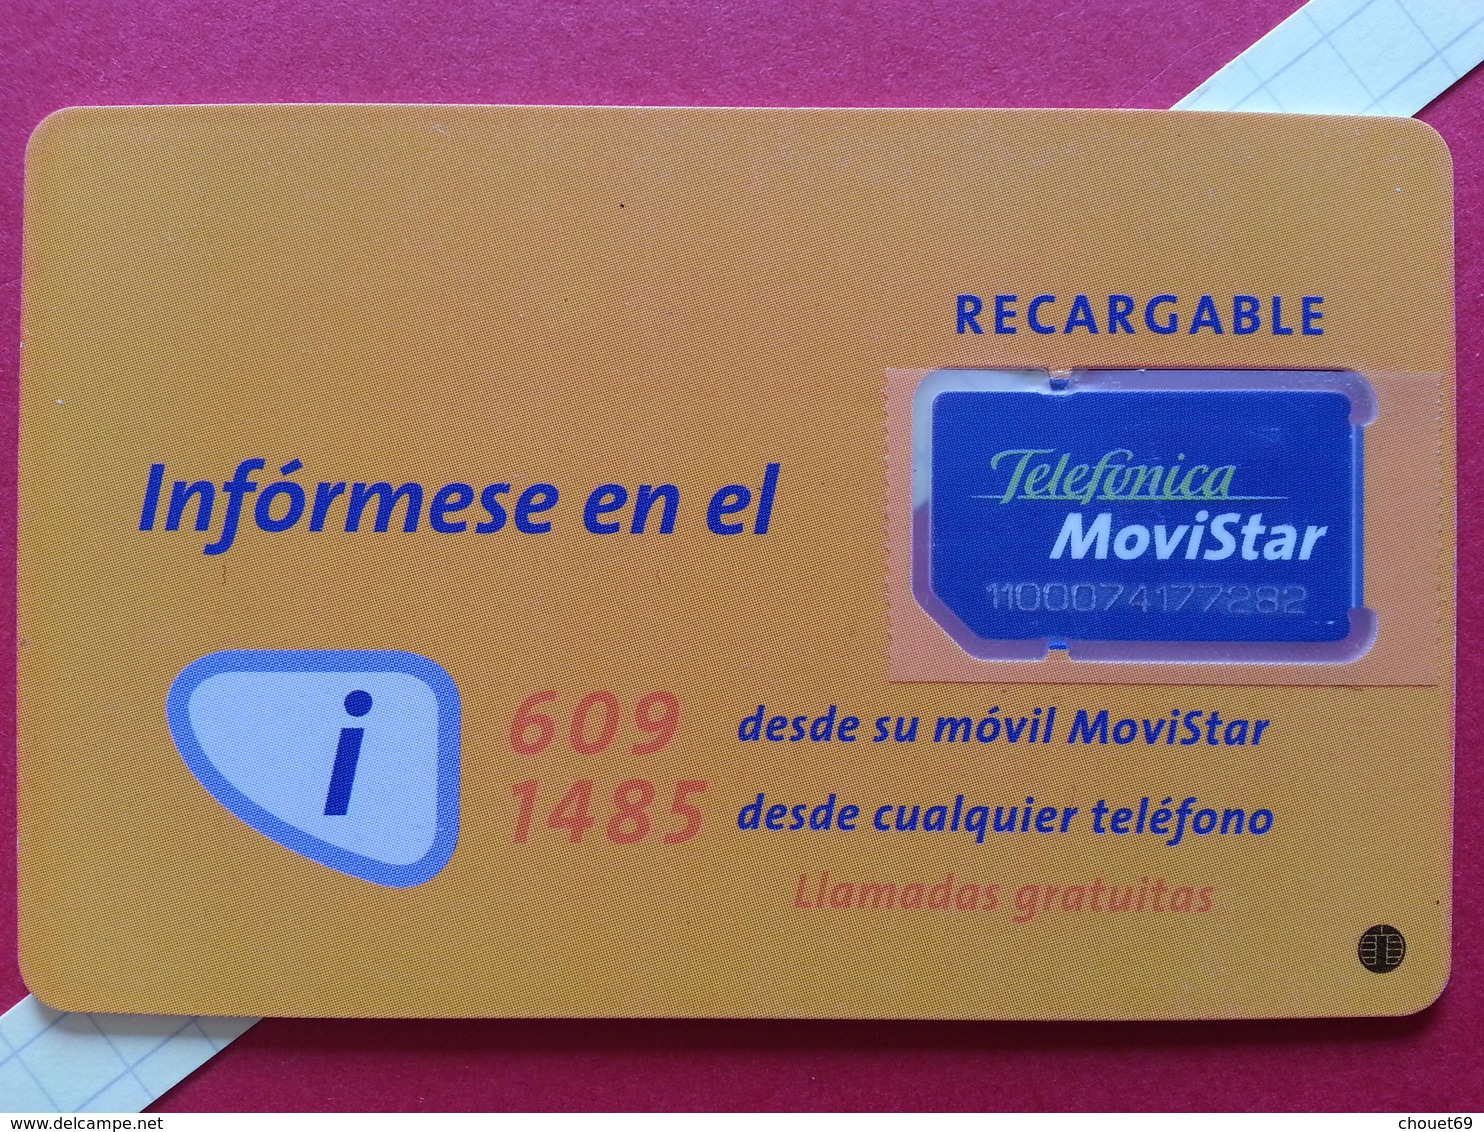 SPAIN SIM GSM Telefonica Movistar ACTIVA Orange Cut Chip - Numbers Back USIM RARE Used (BH1219b - Telefonica